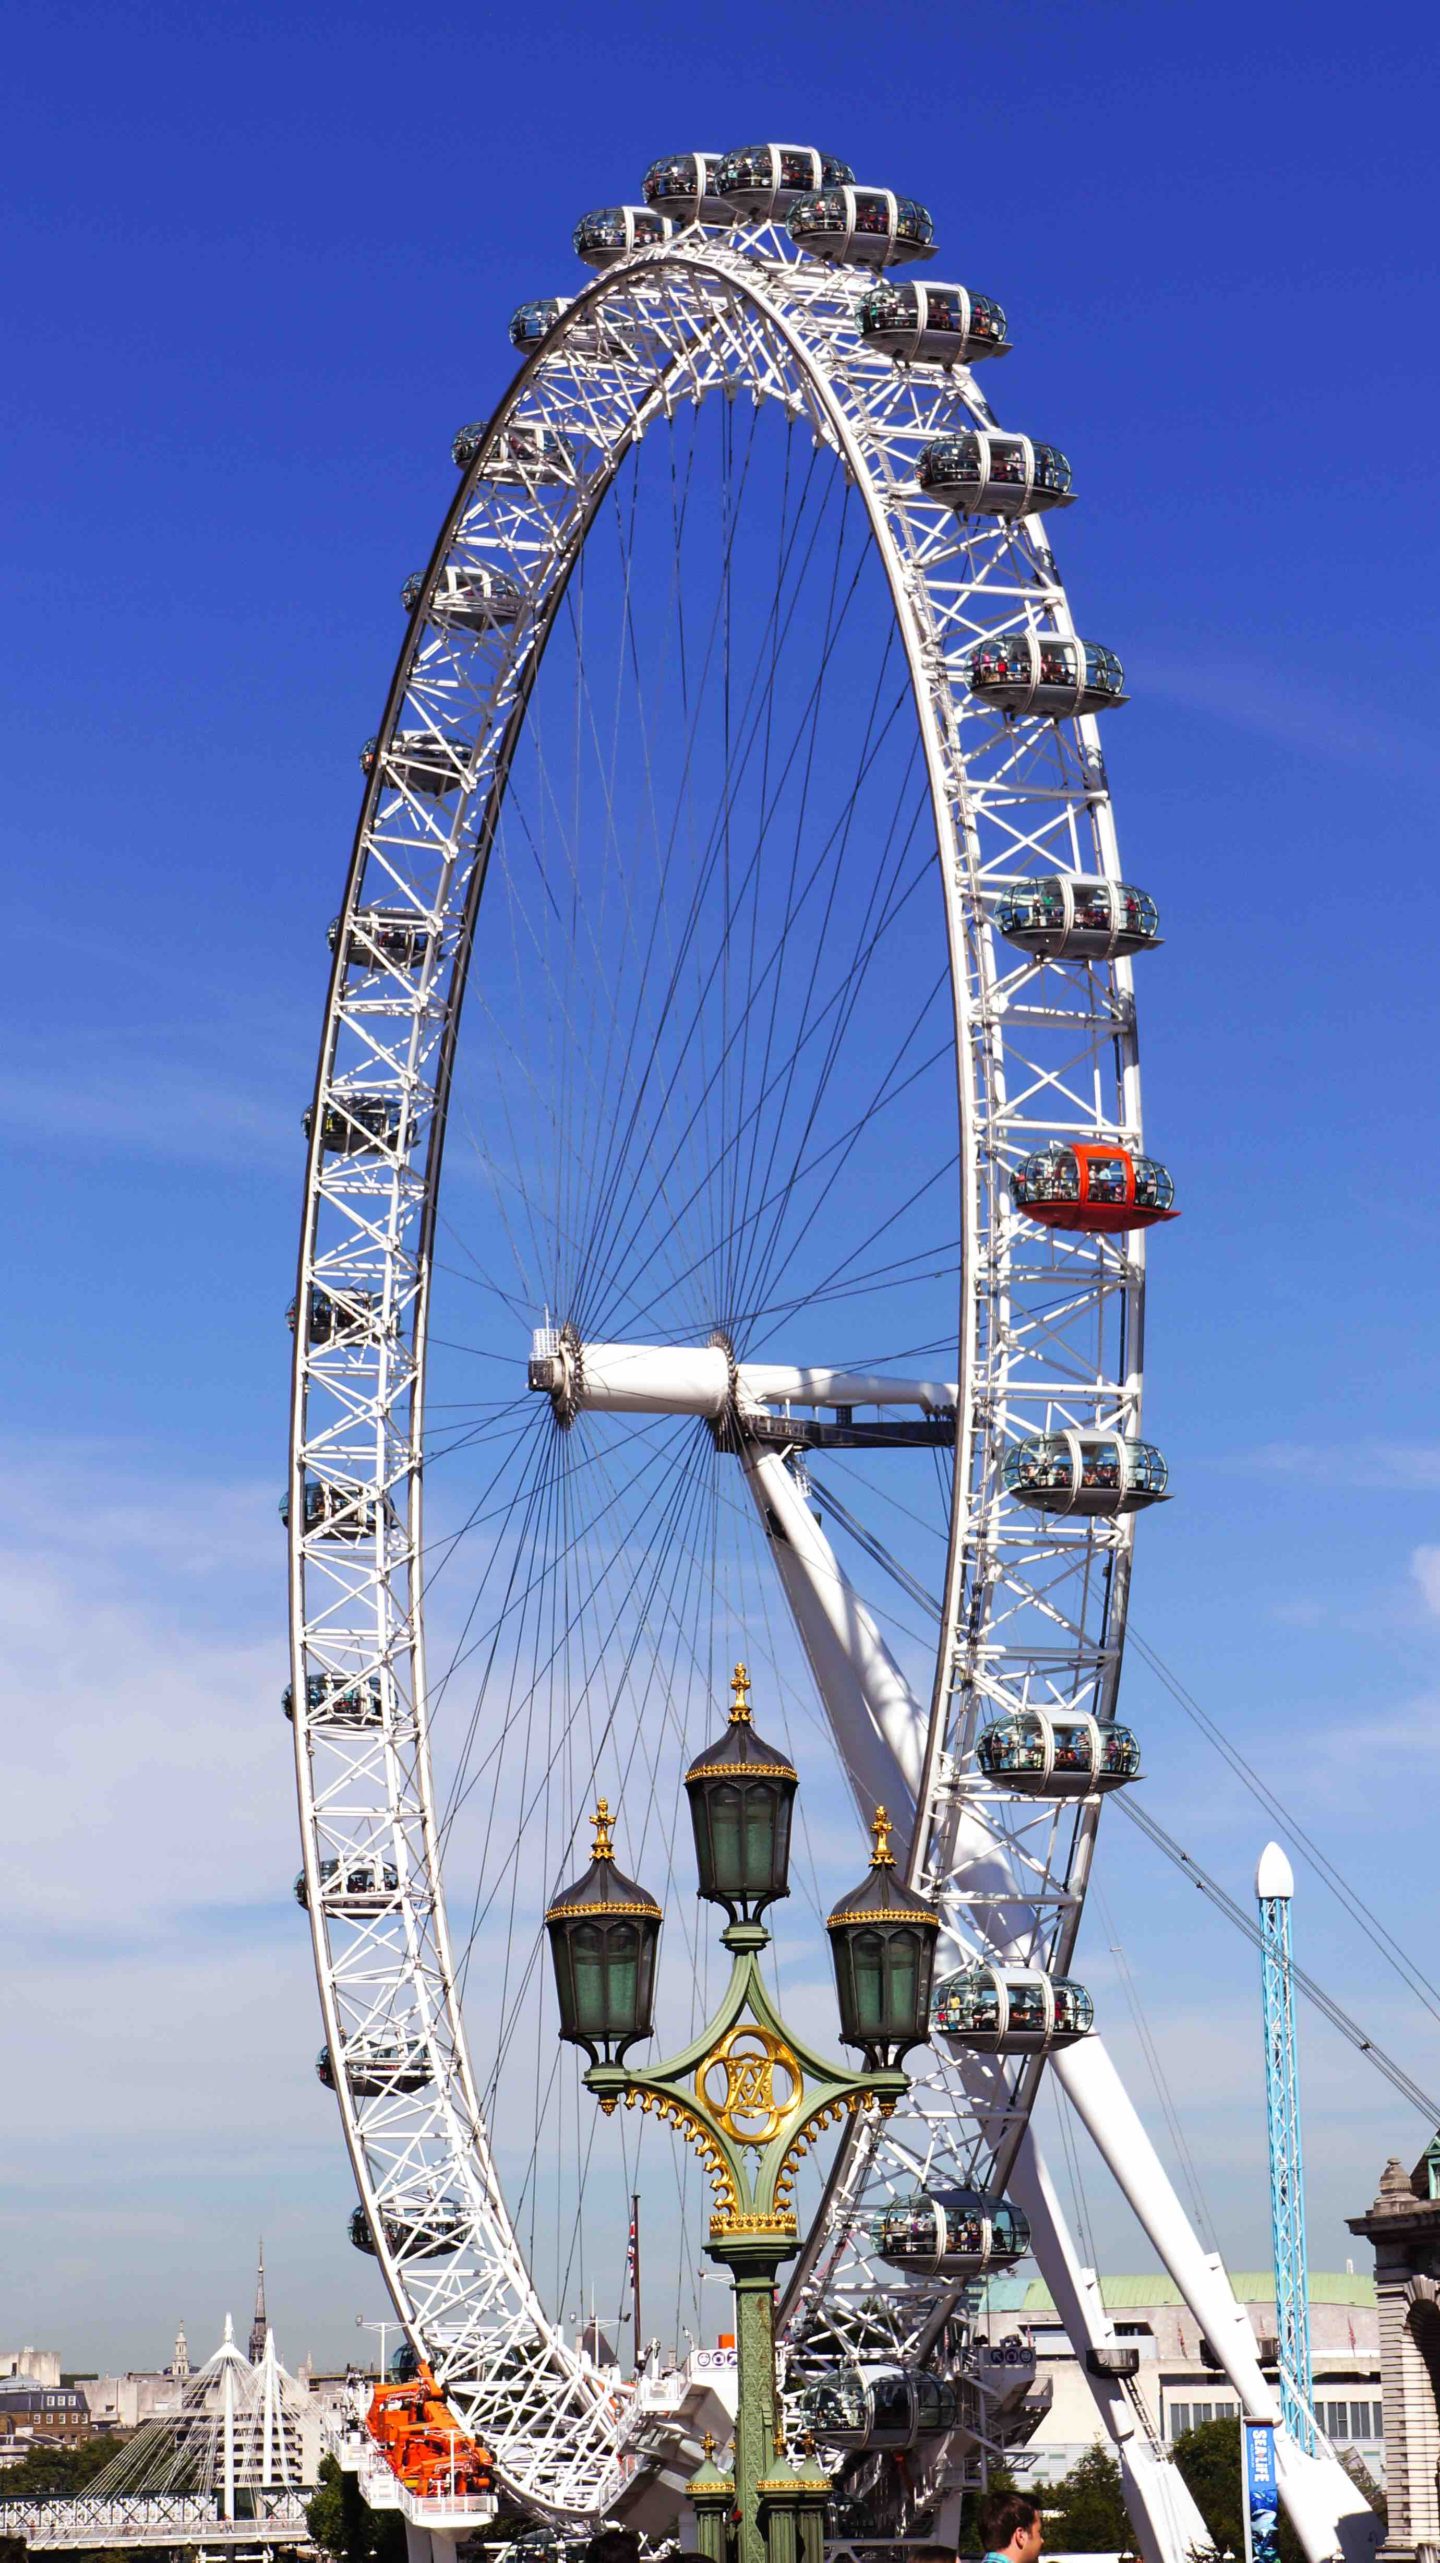 London Eye London Travel Guide Itinerary